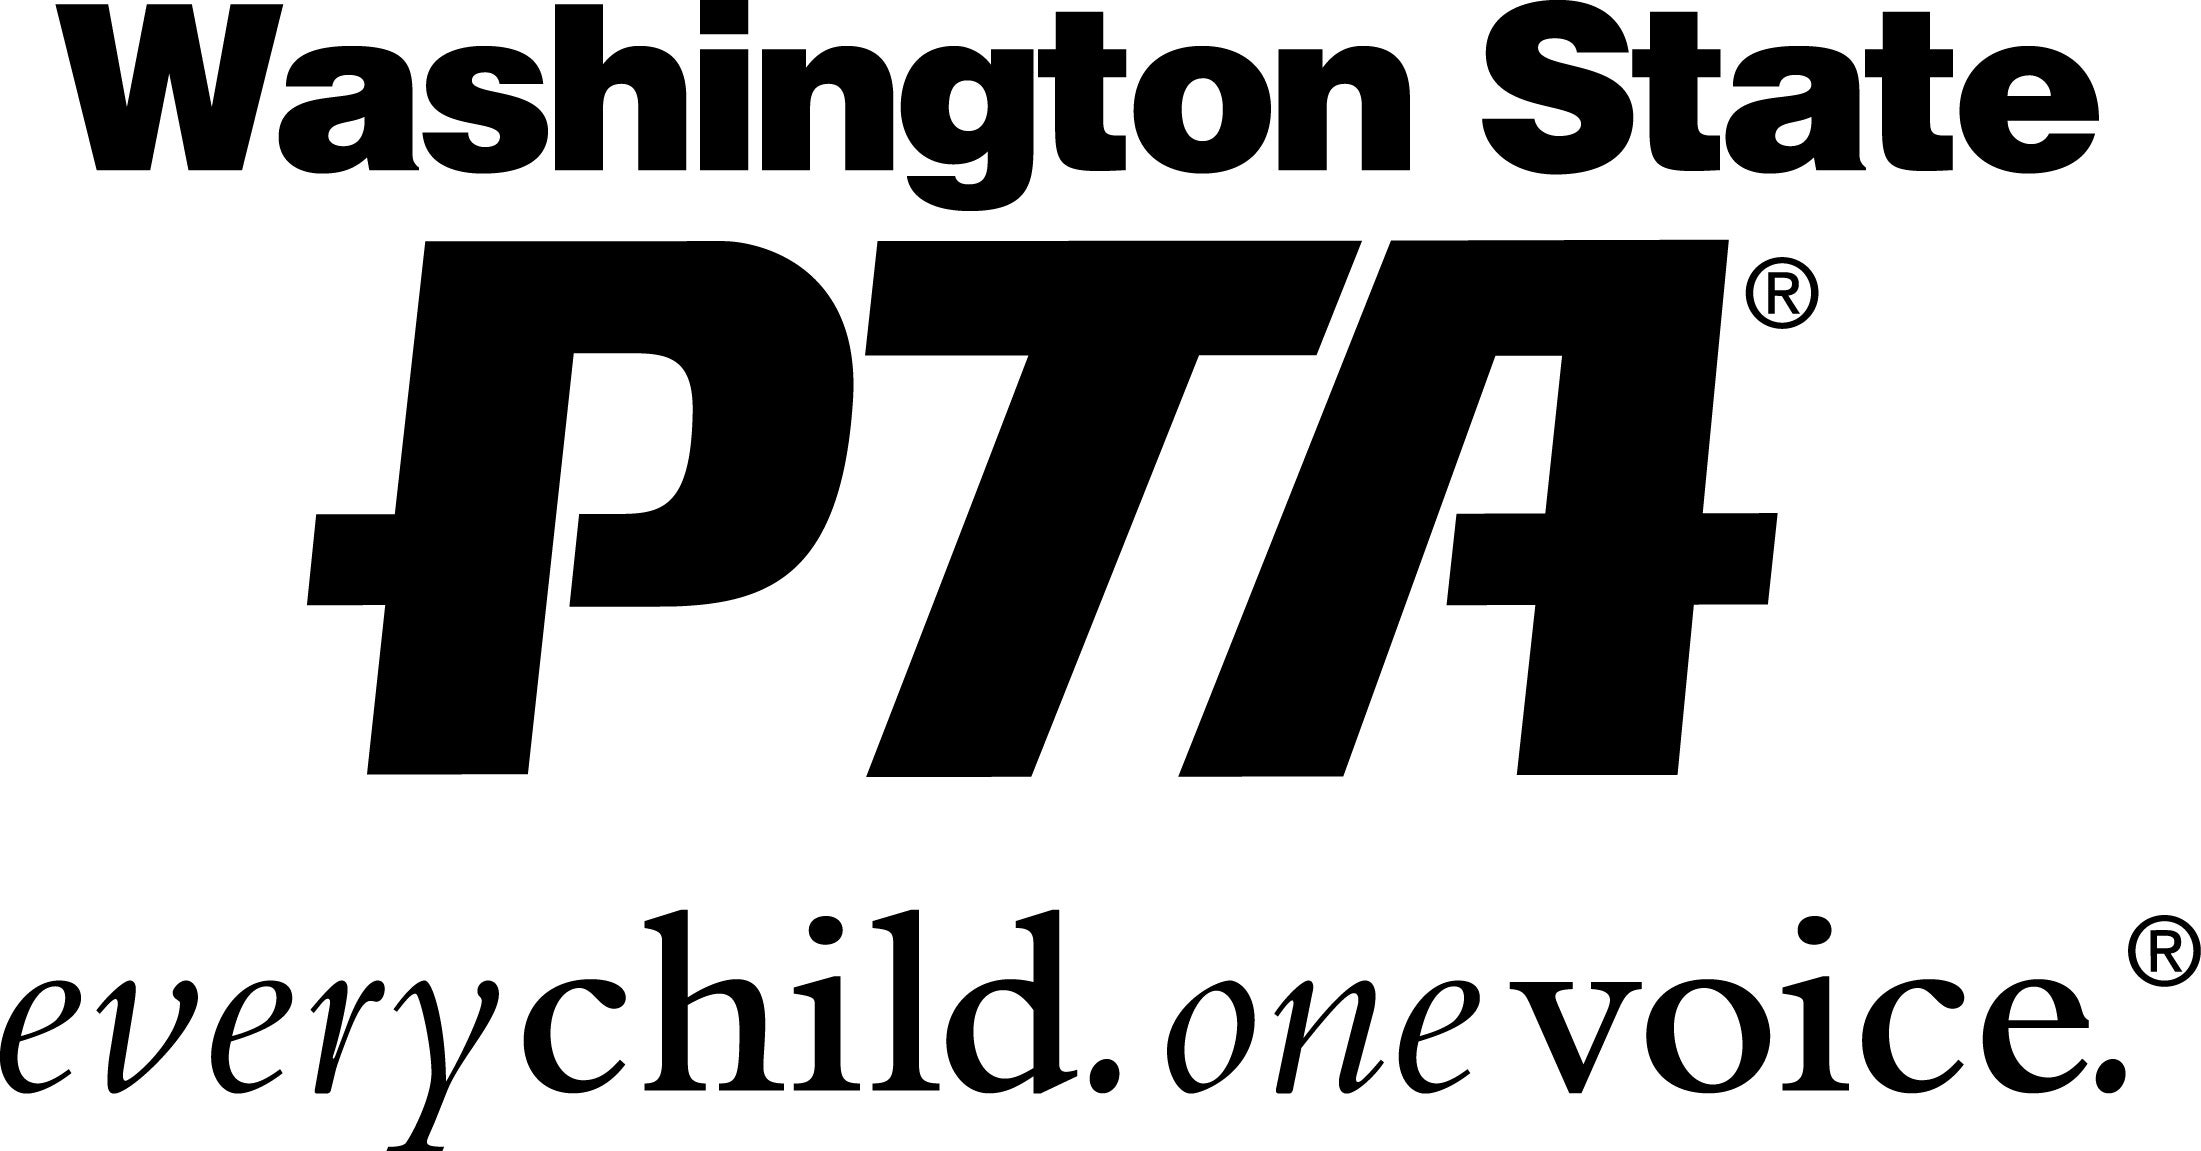 Washington State PTA every child. one voice. 